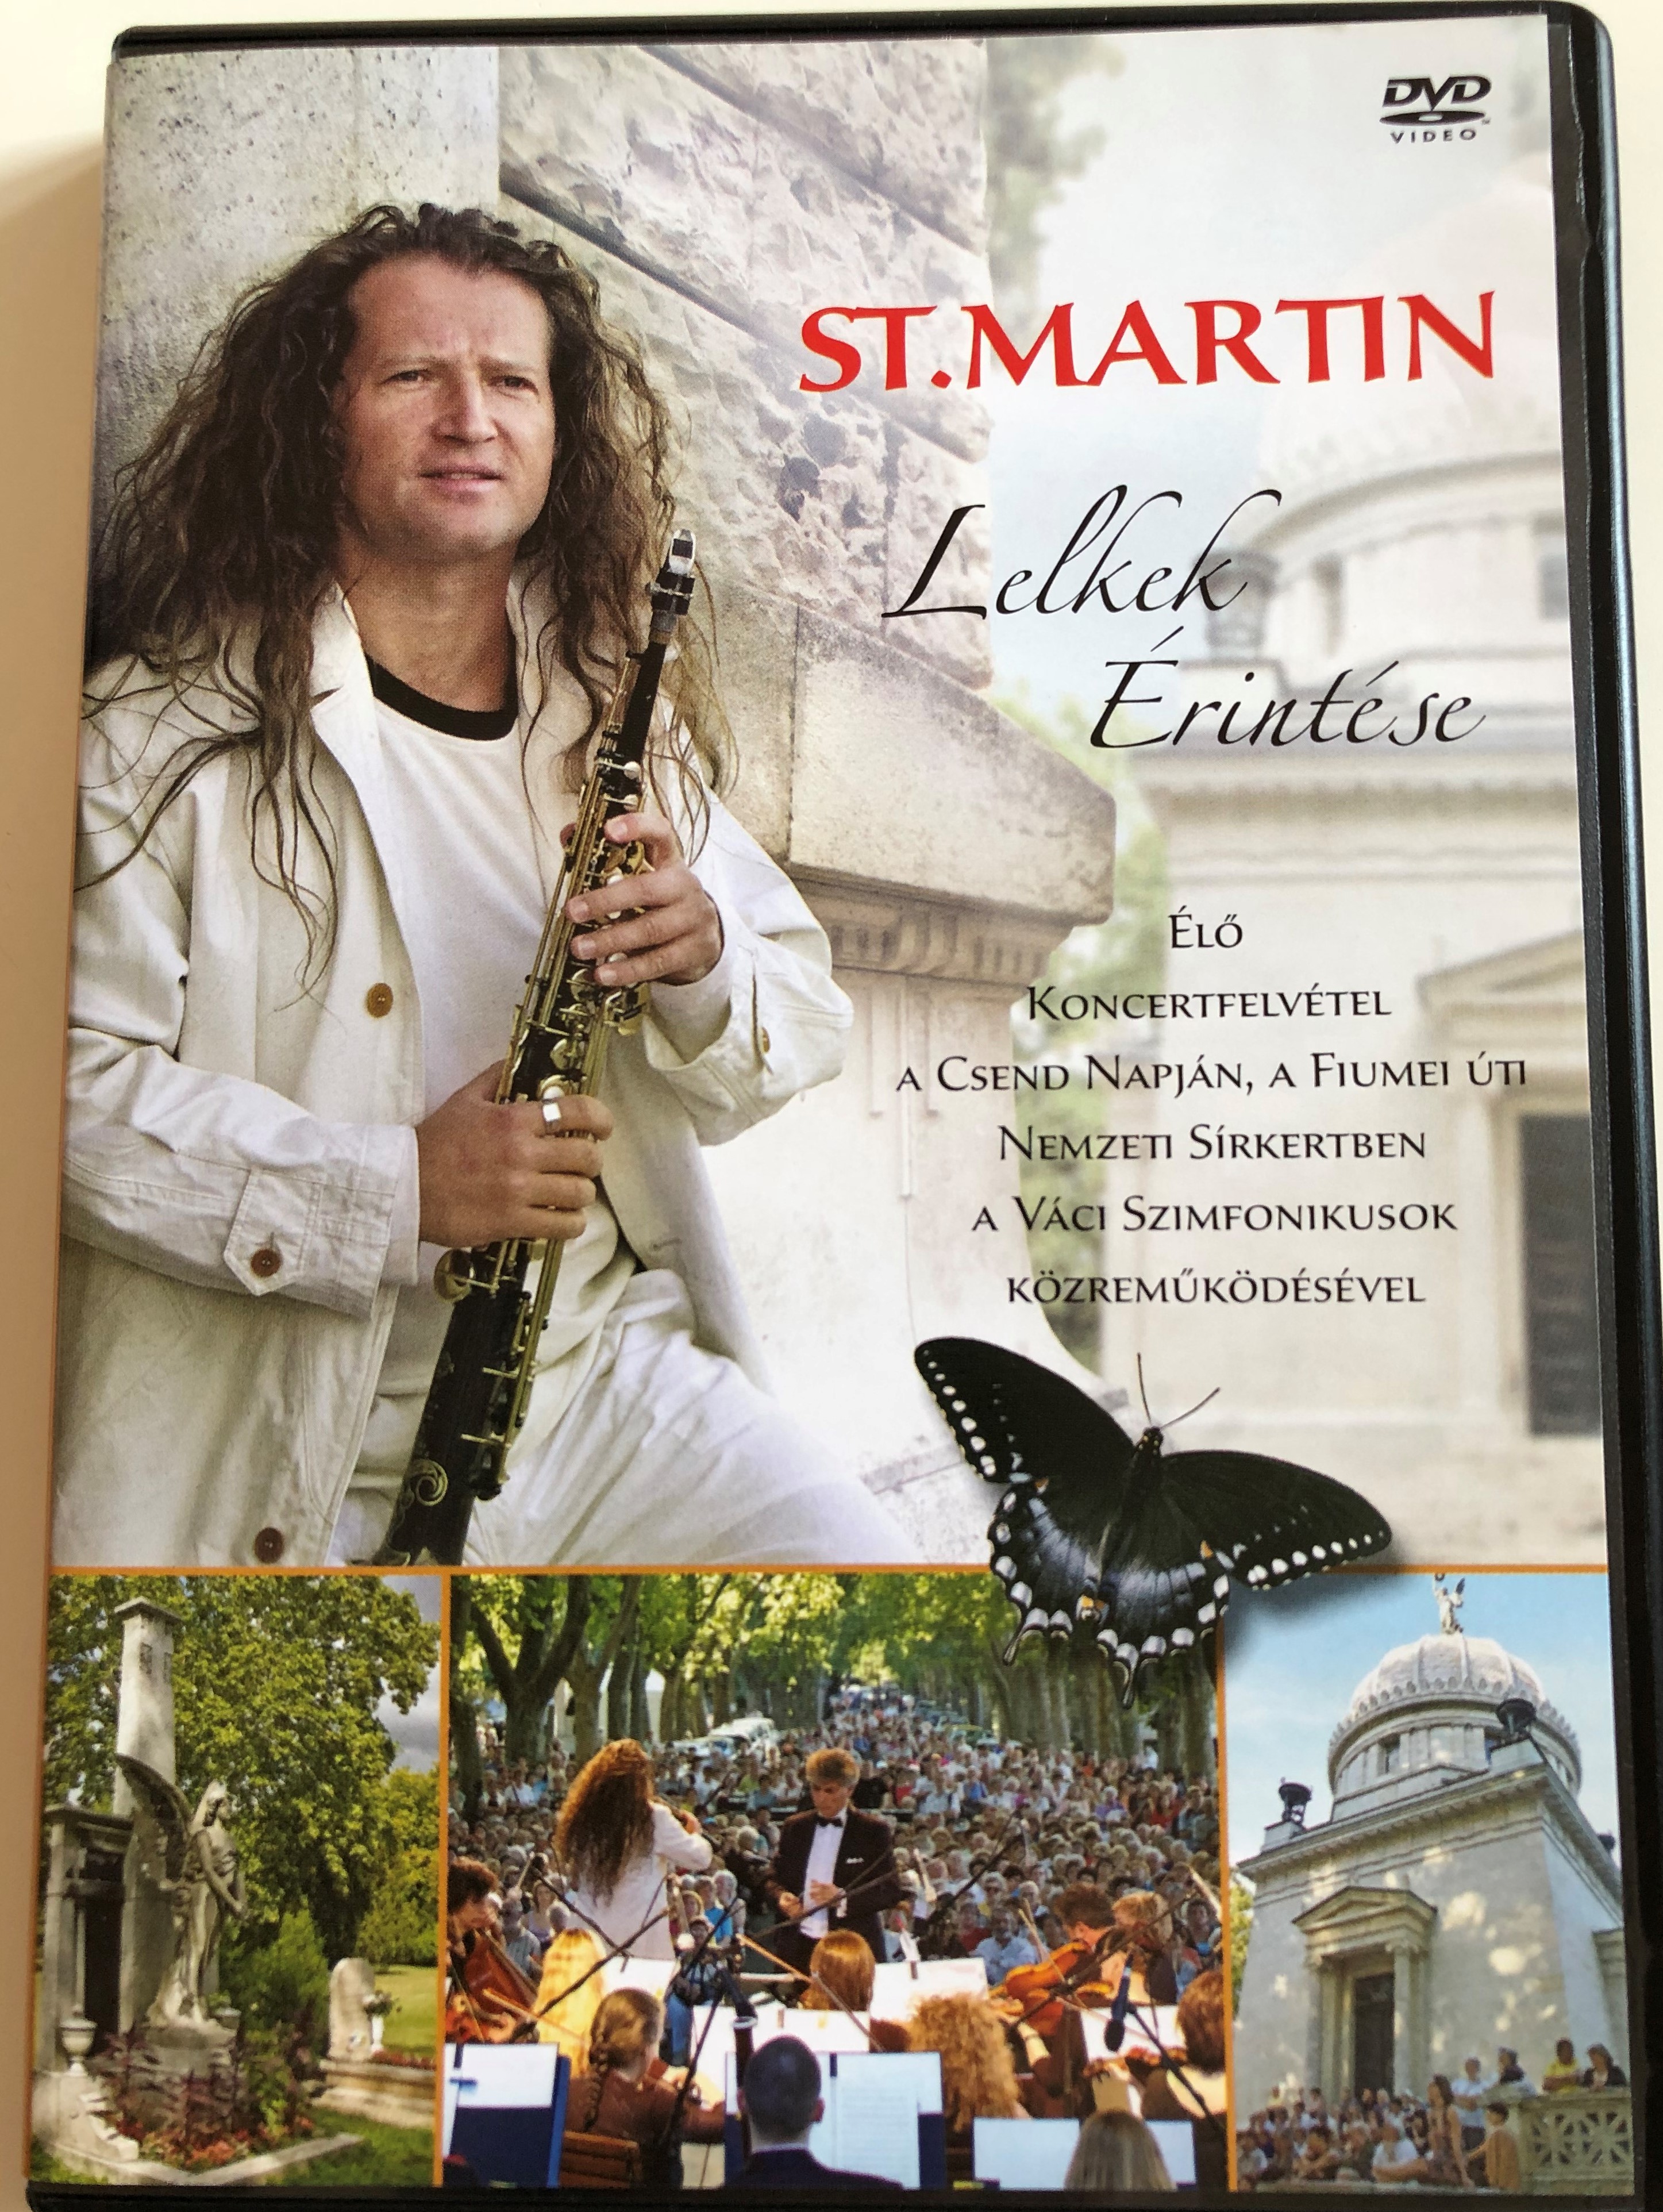 St. Martin - Lelkek érintése DVD 2009 Live Concert recording 1.JPG